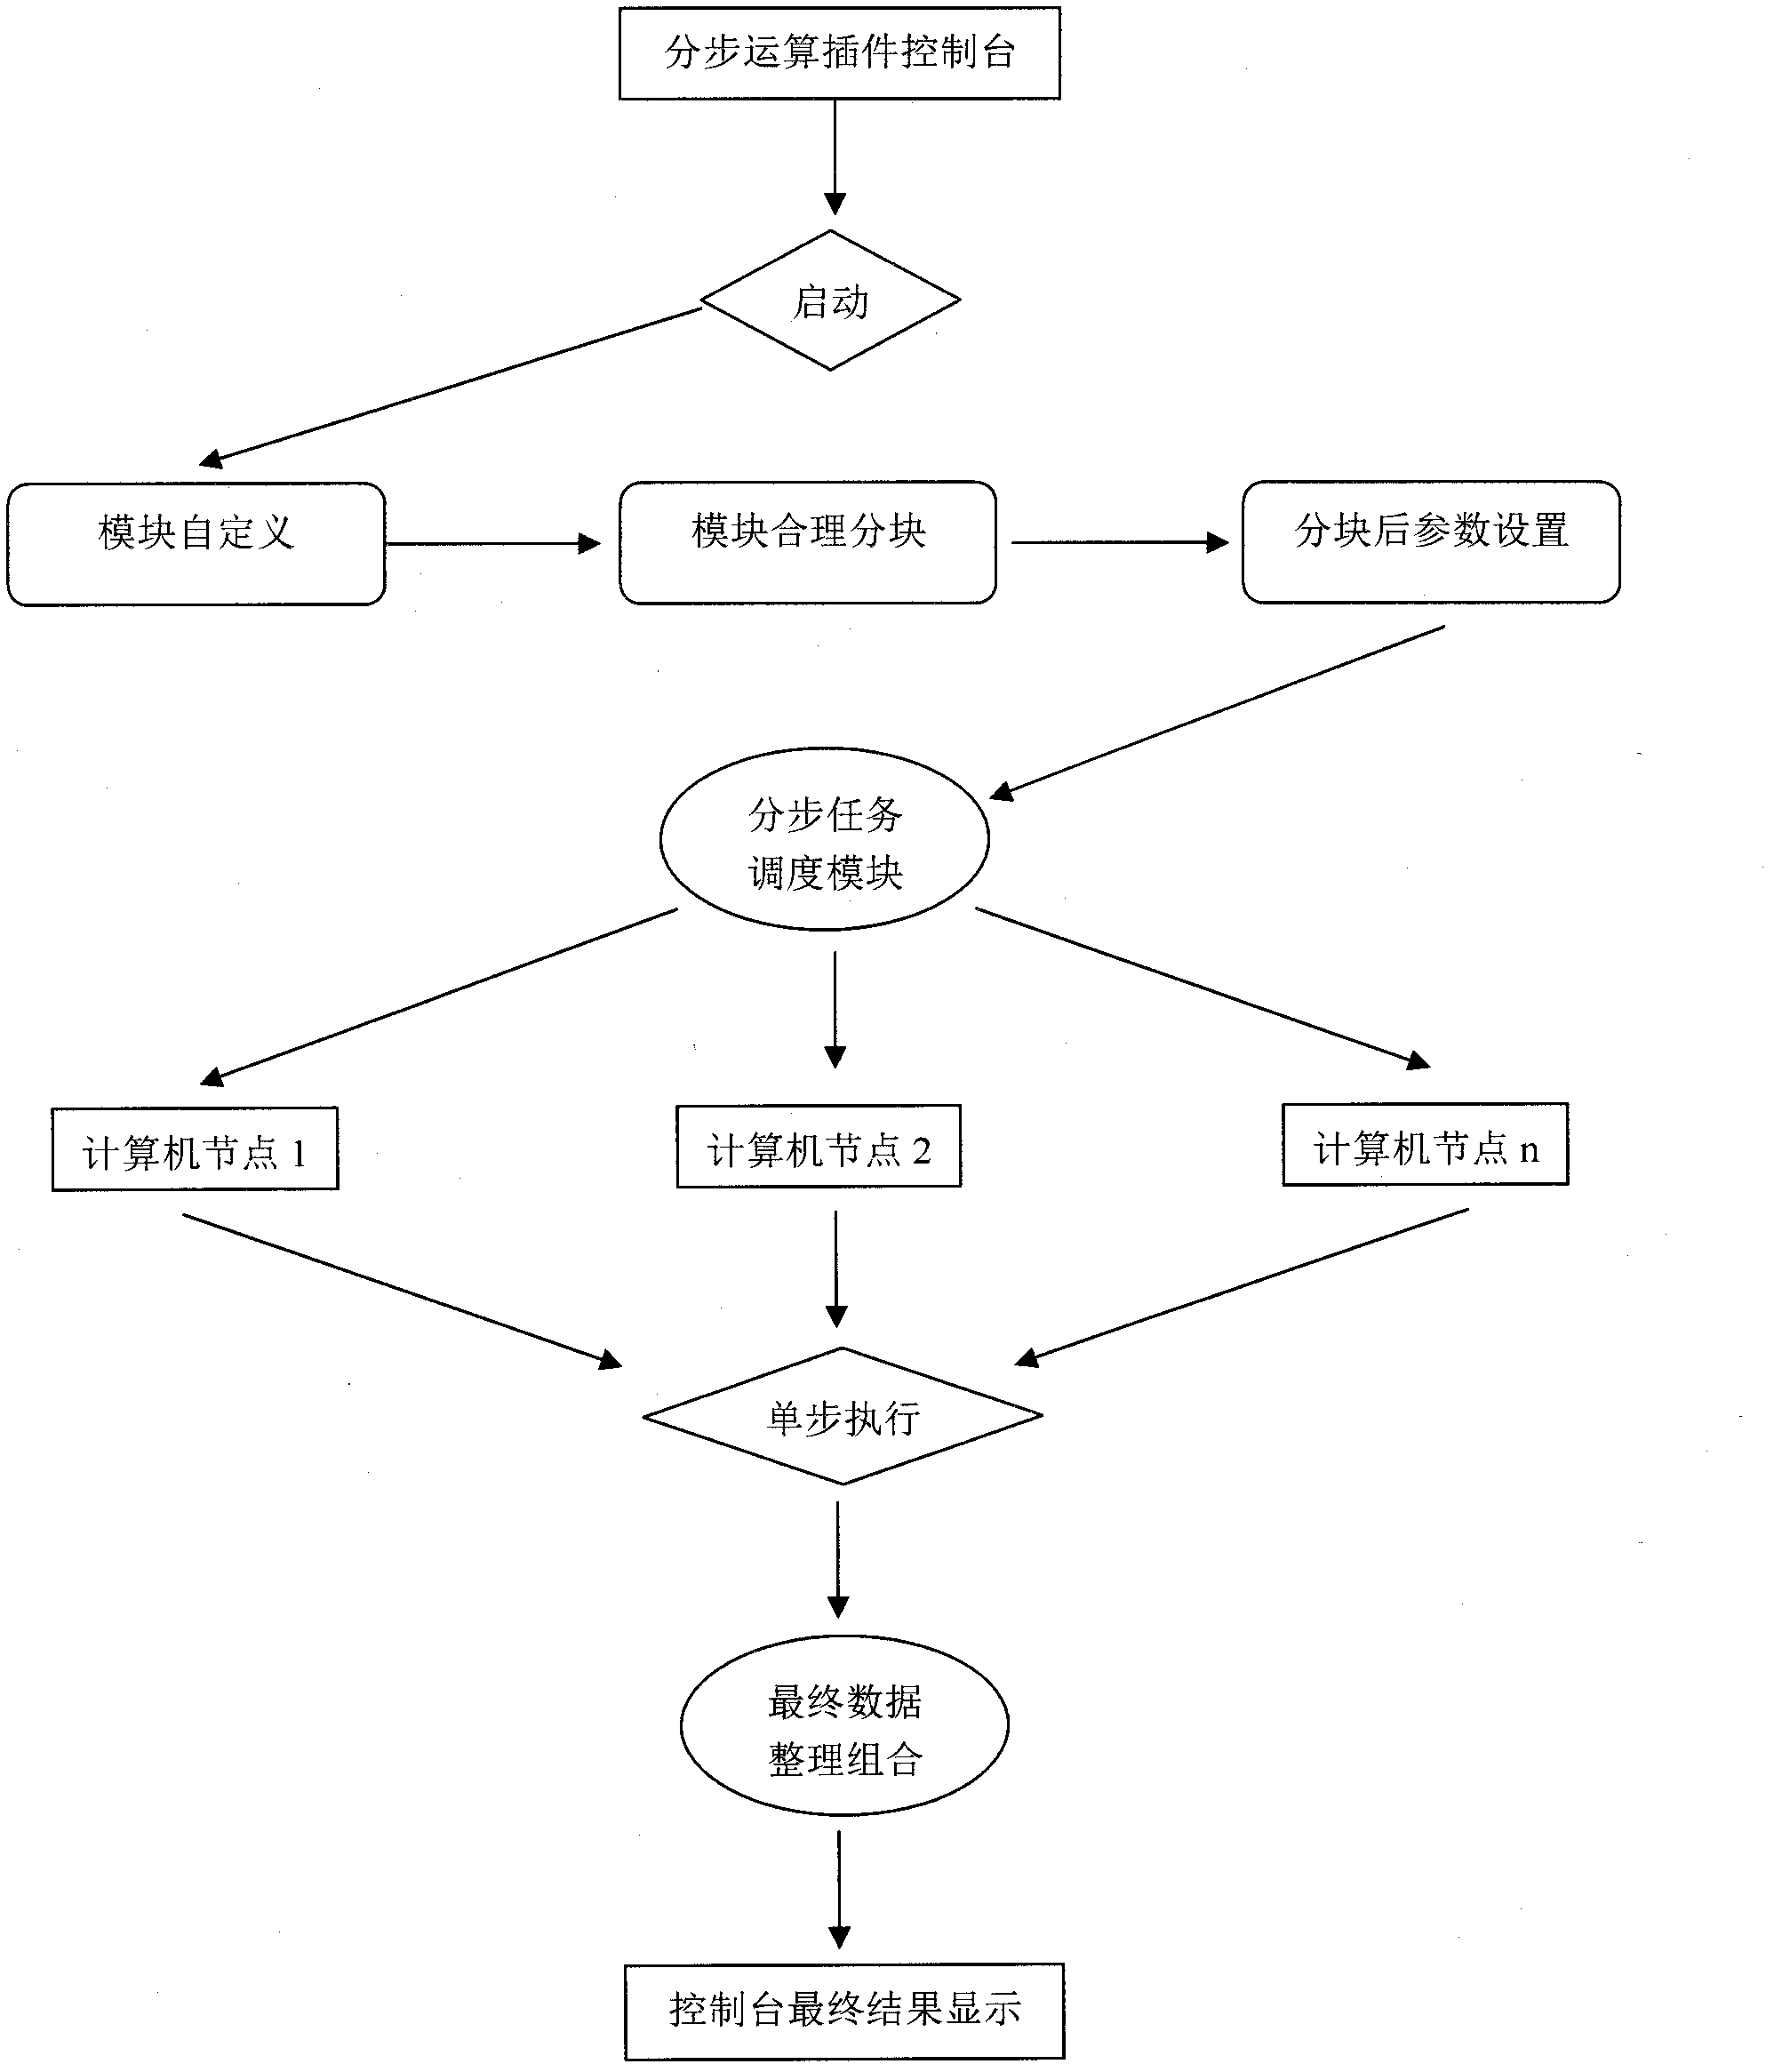 Method for executing stepwise plug-in computation